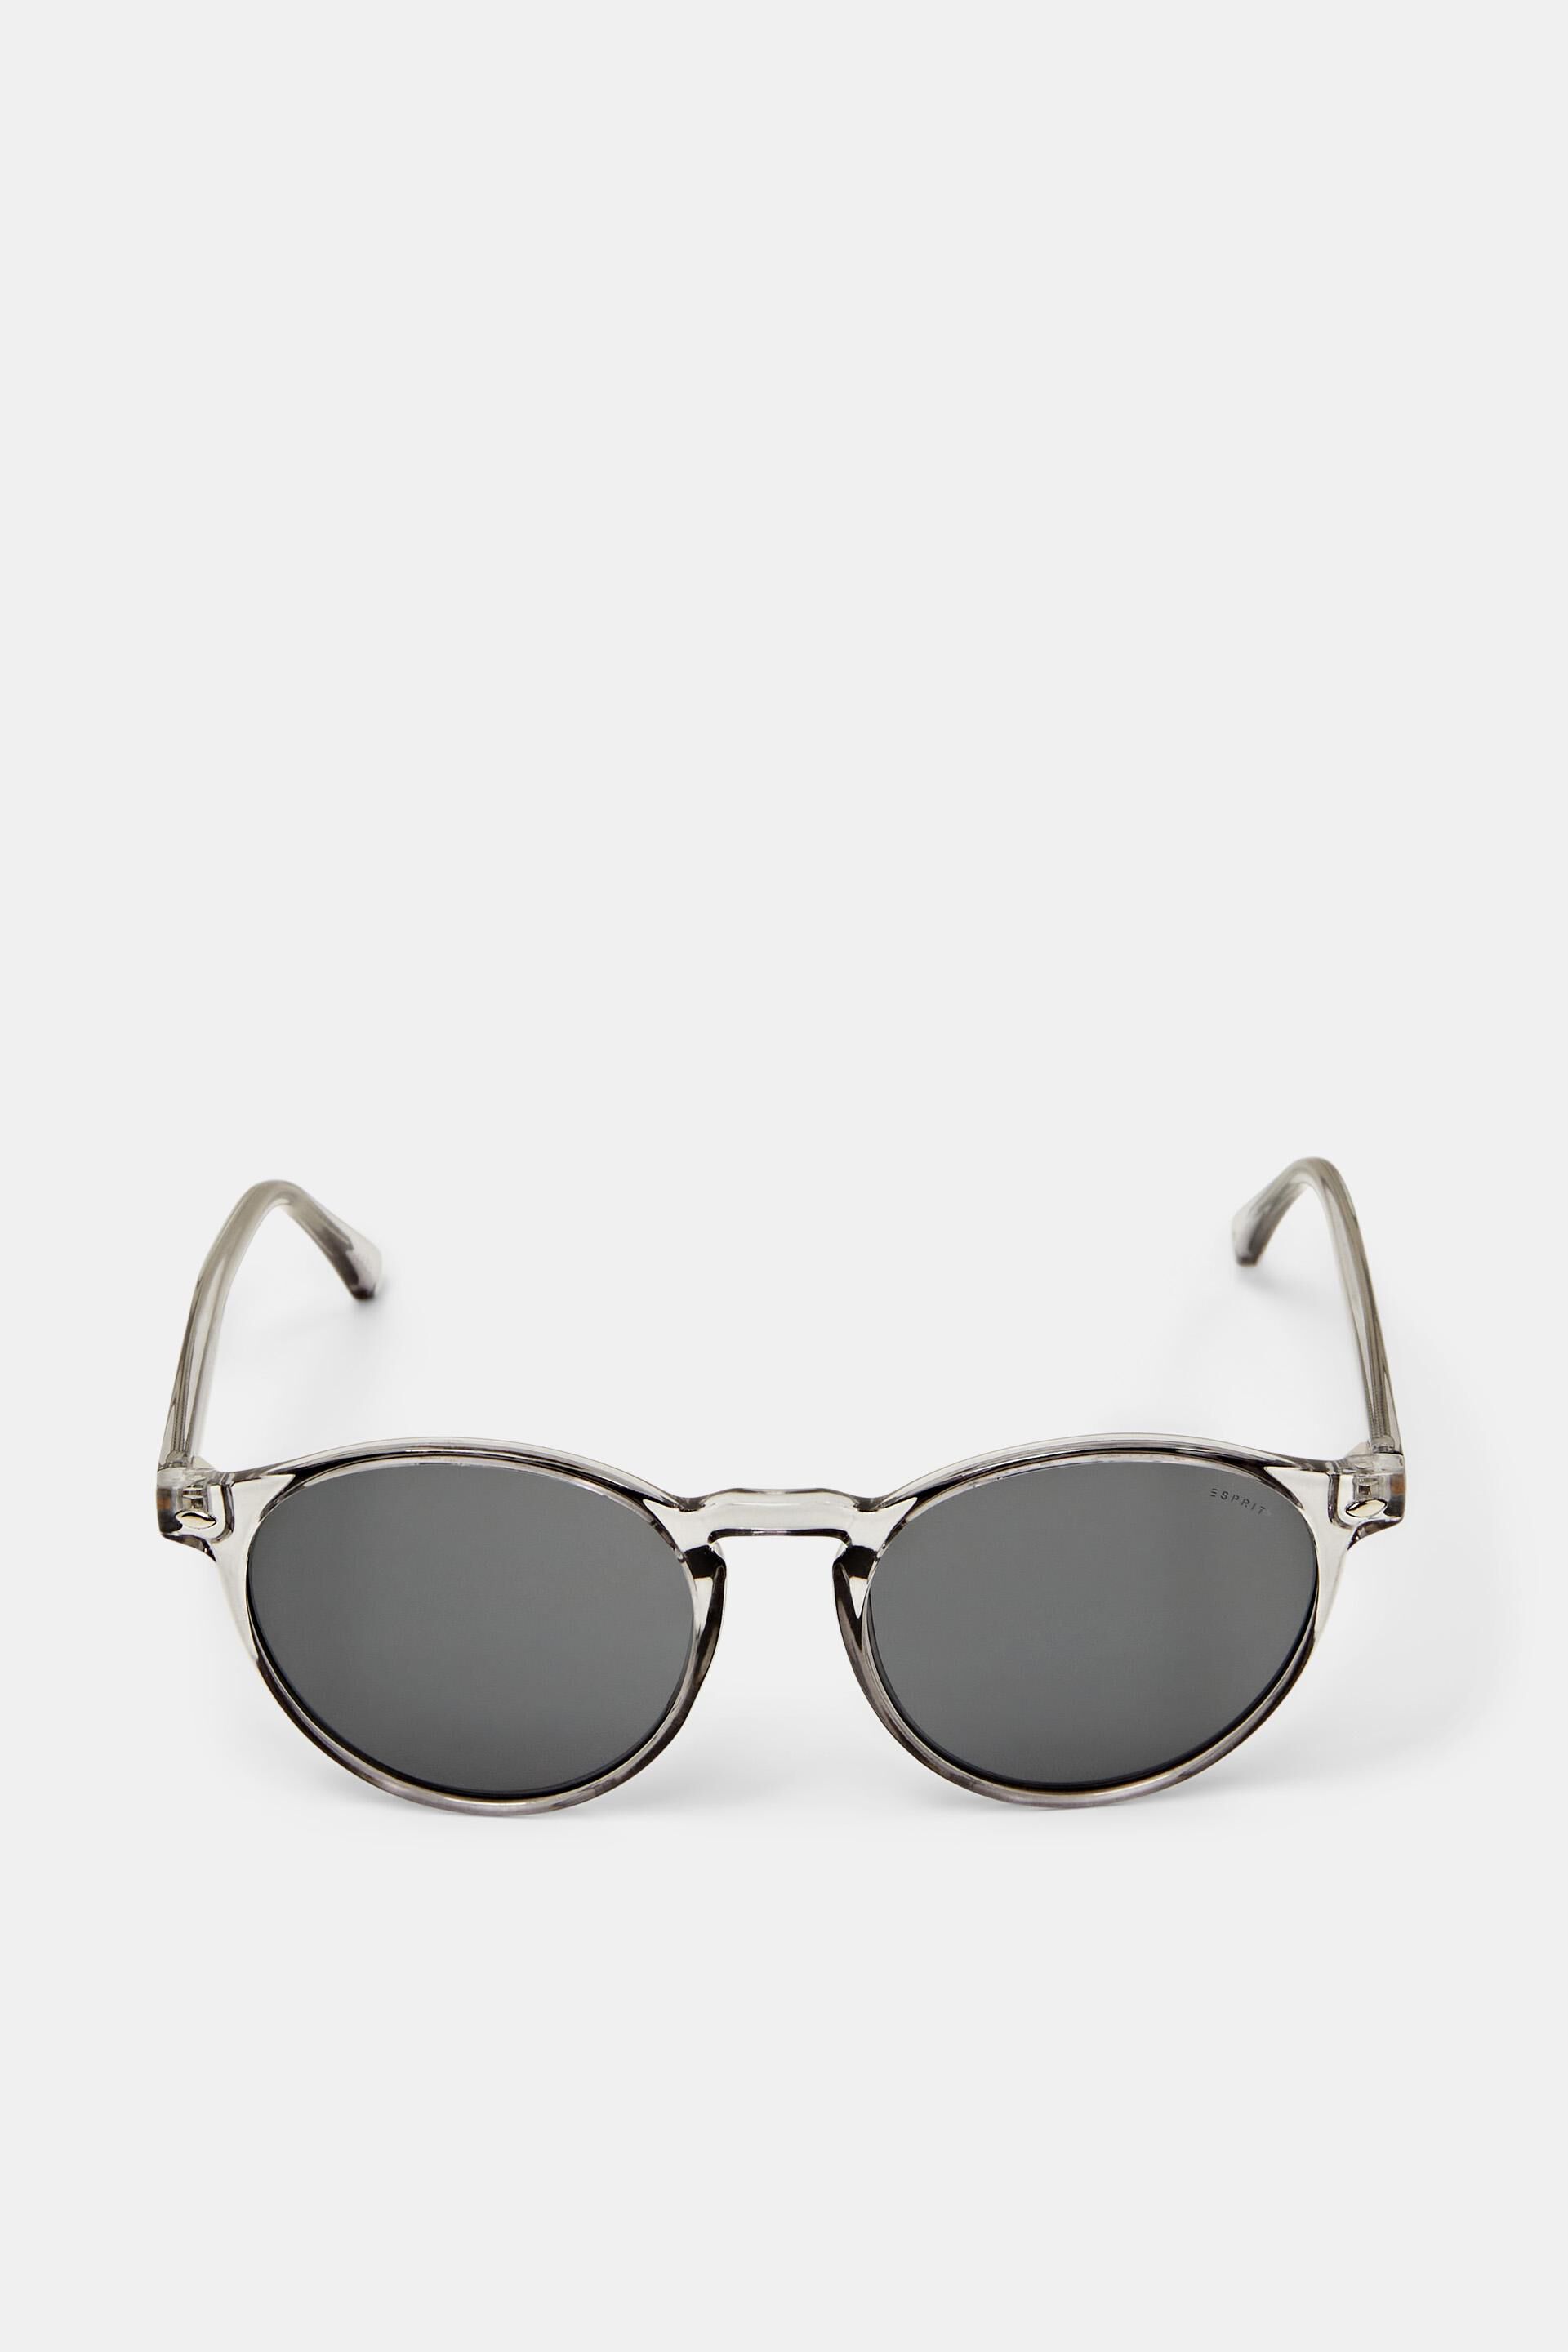 Esprit Sunglasses round with transparent frame